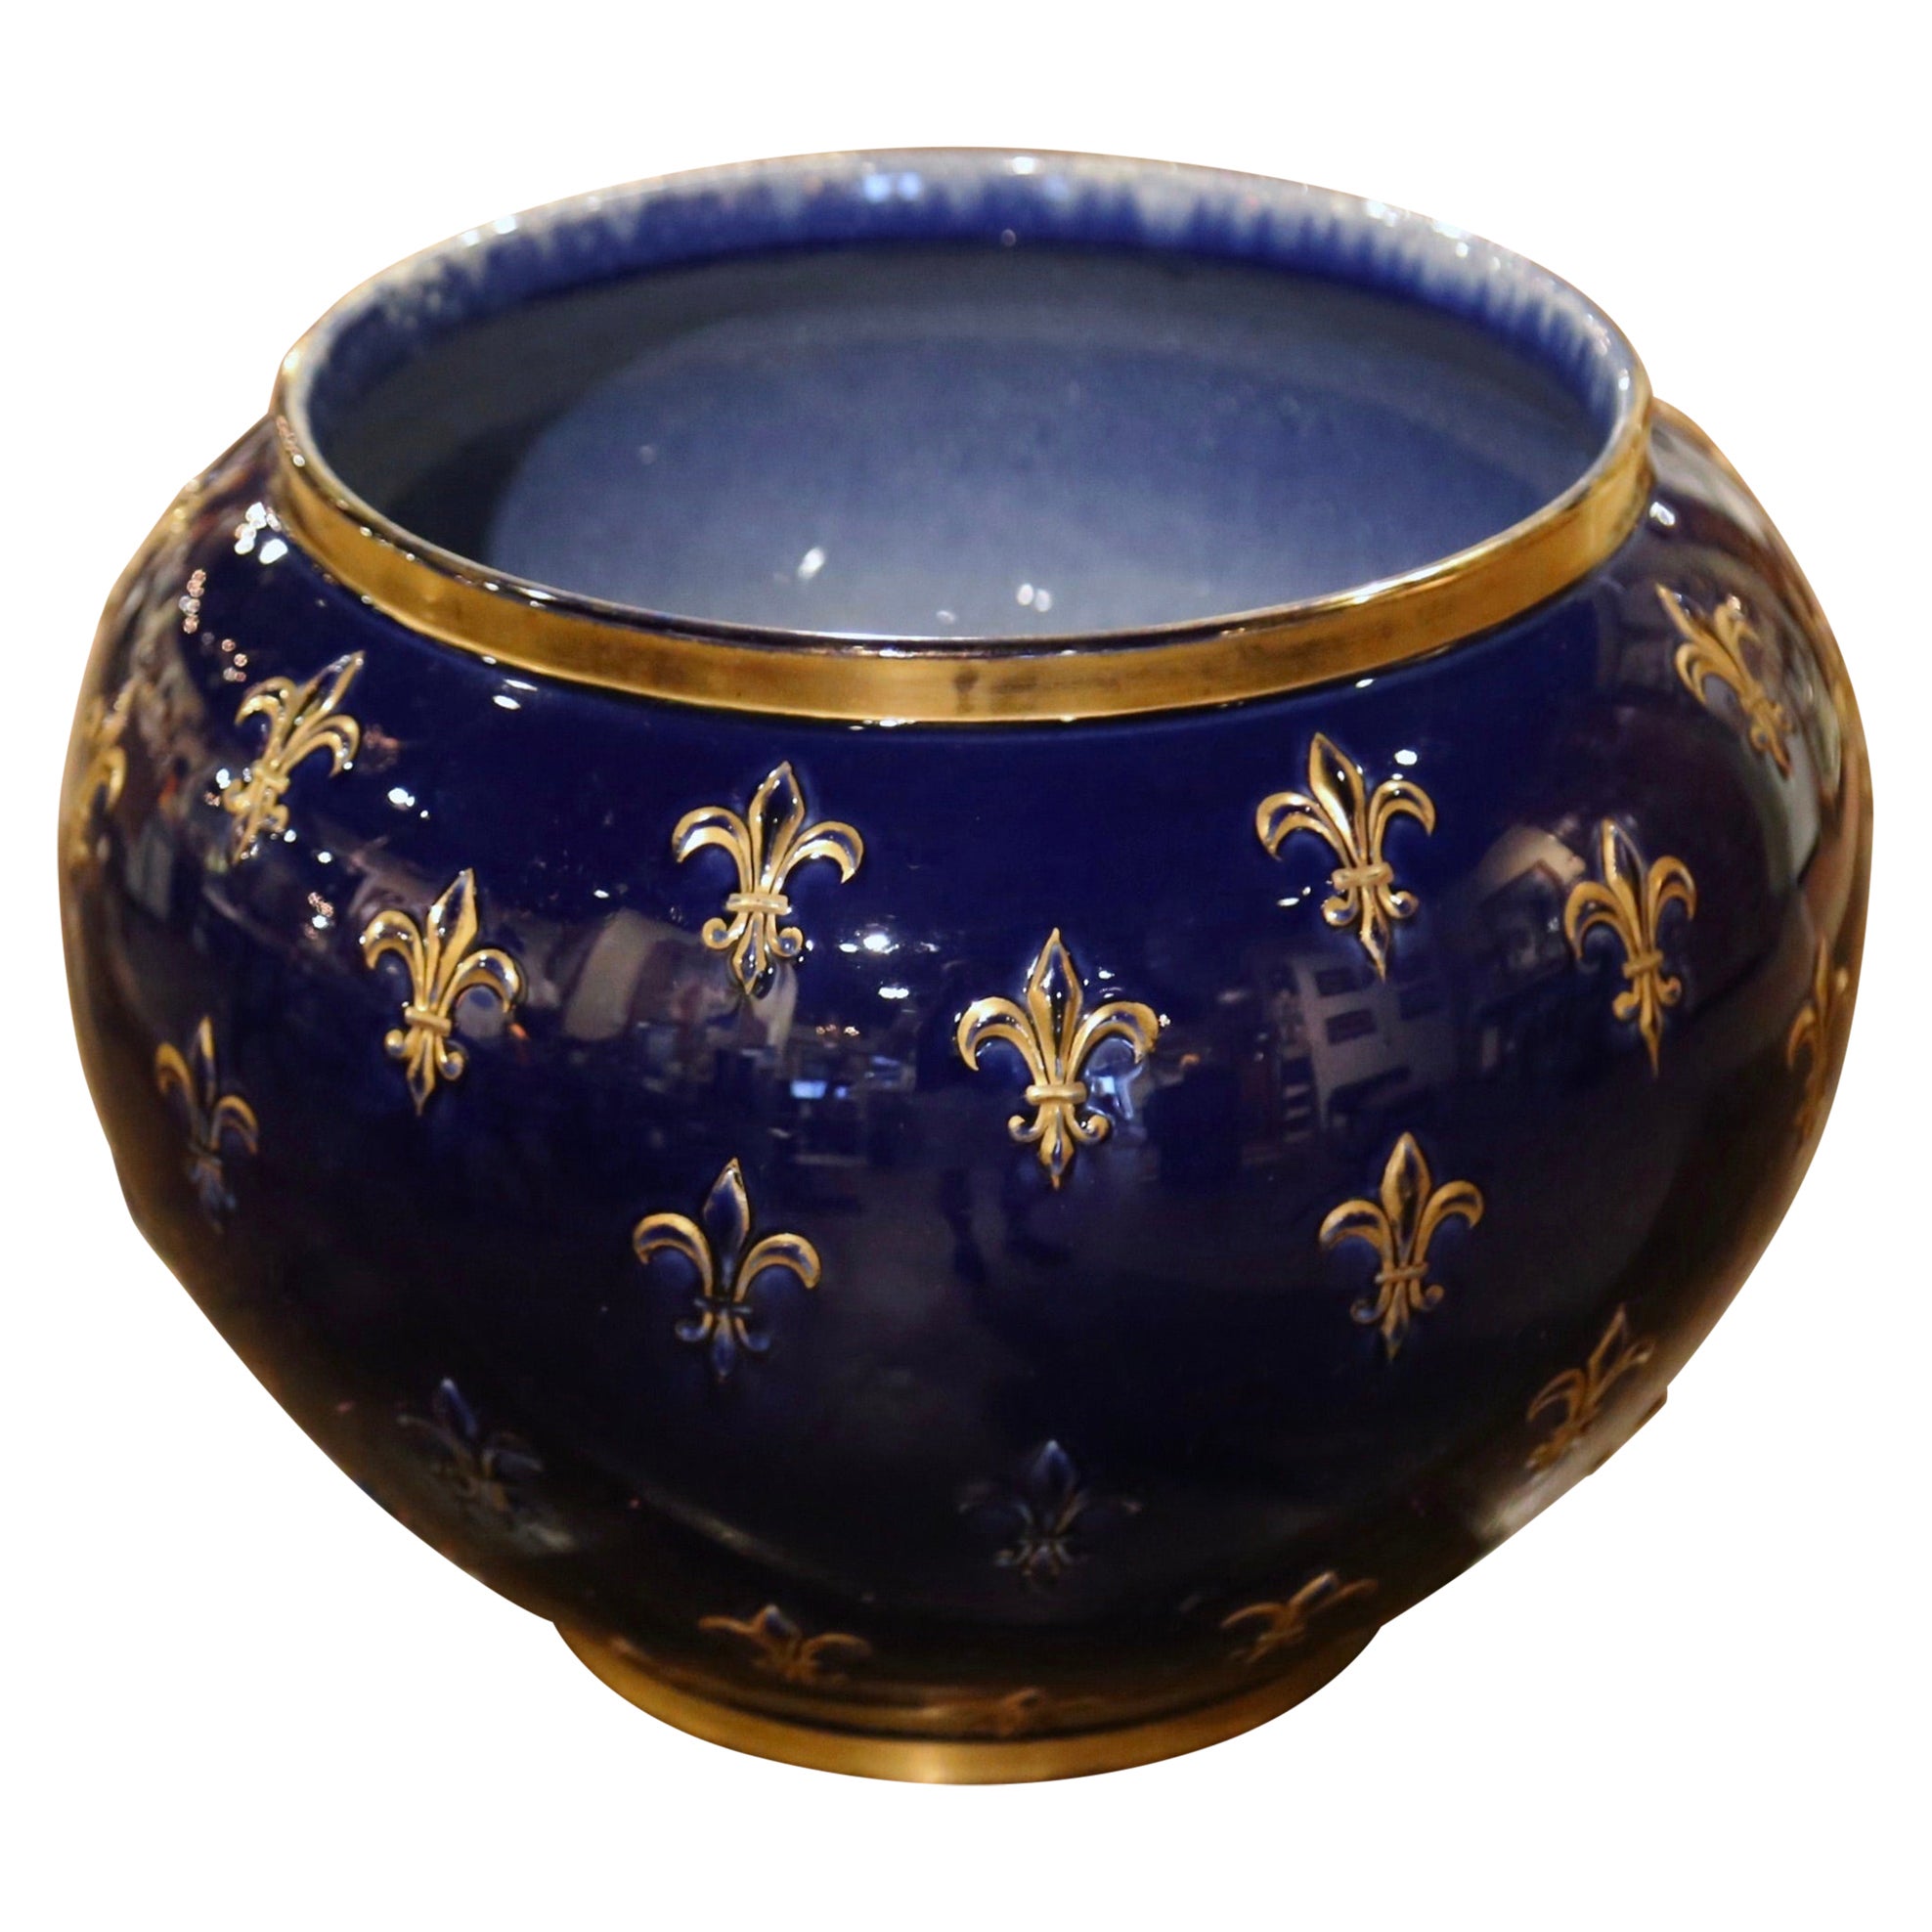 Mid-Century French Painted Porcelain Cache Pot with Fleur-de-Lys from Luneville